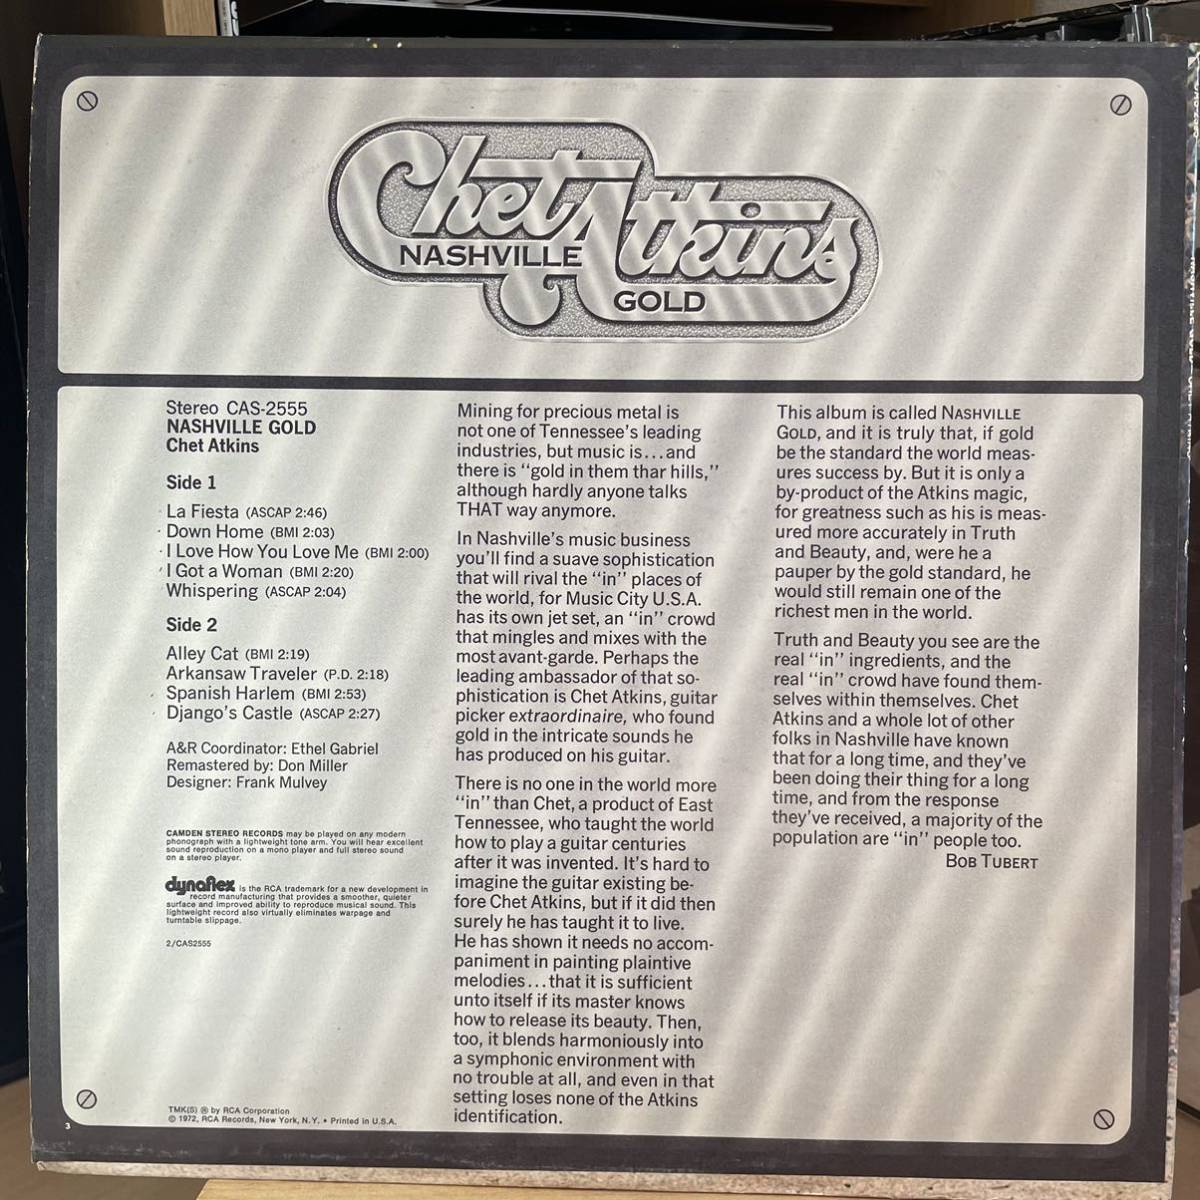 [US запись Org.]Chet Atkins Nashville Gold (1972) RCA Camden CAS-2555